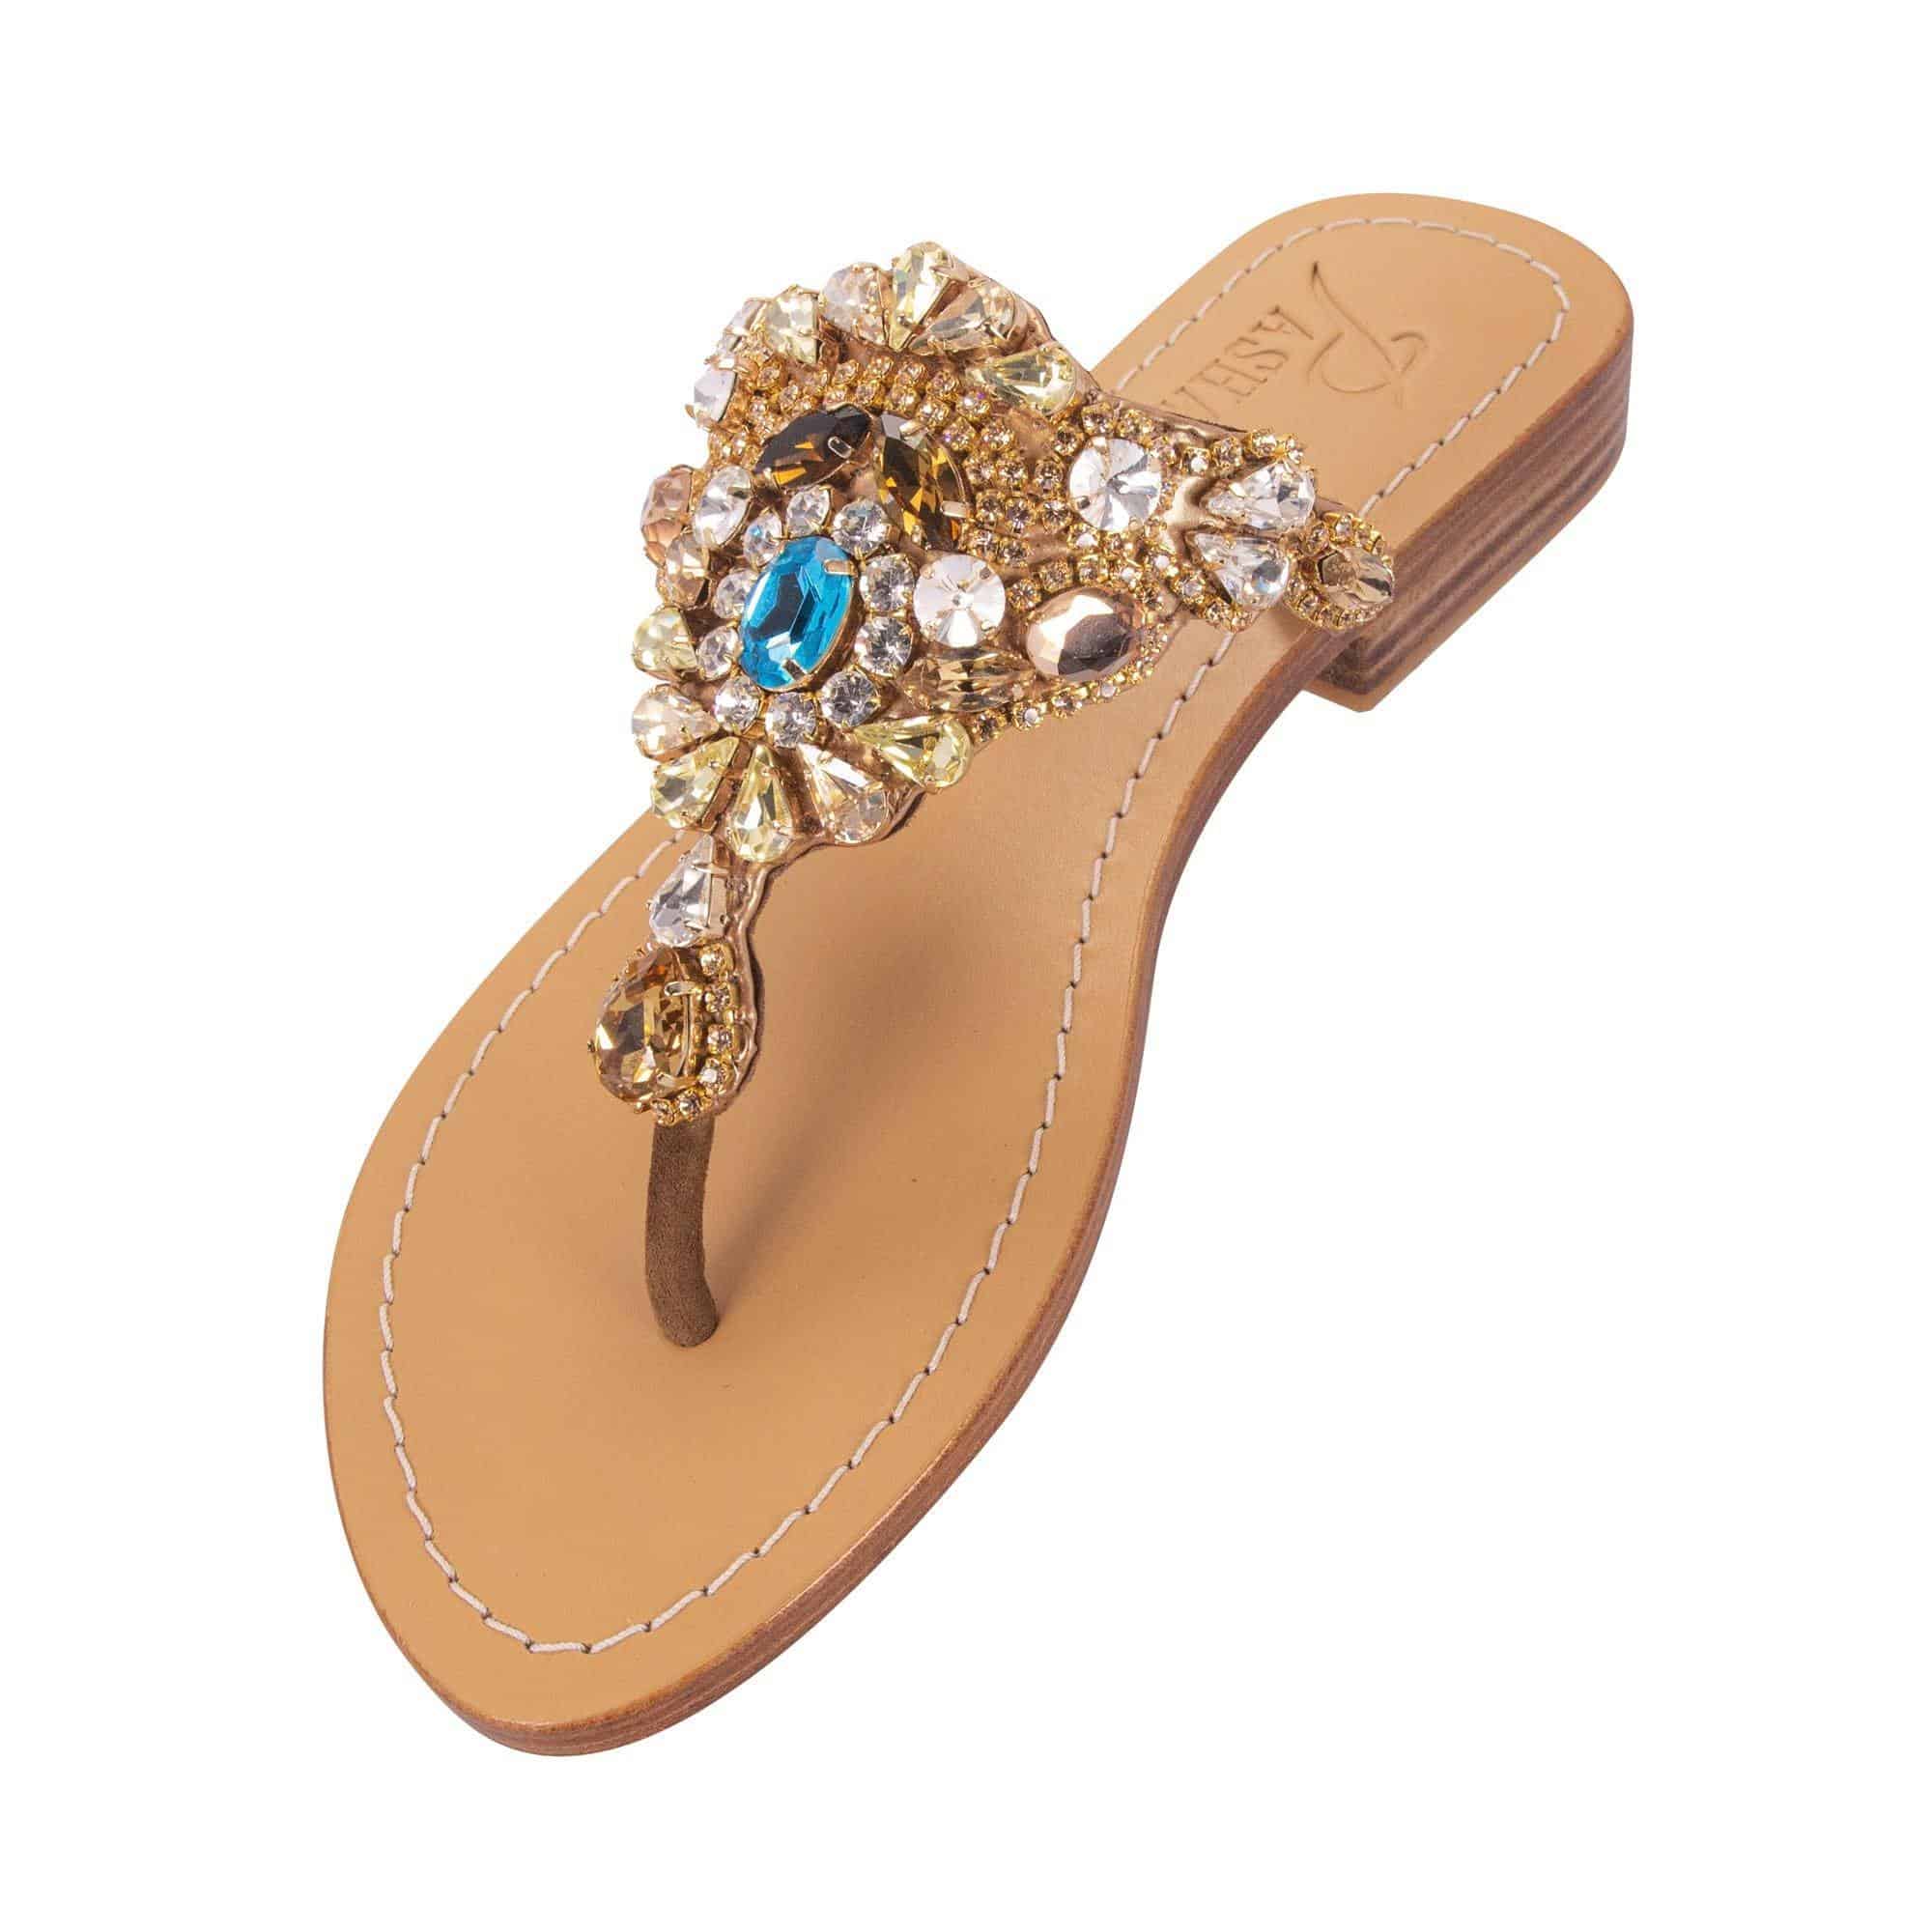 CORFU - Pasha - Jewelry for your feet